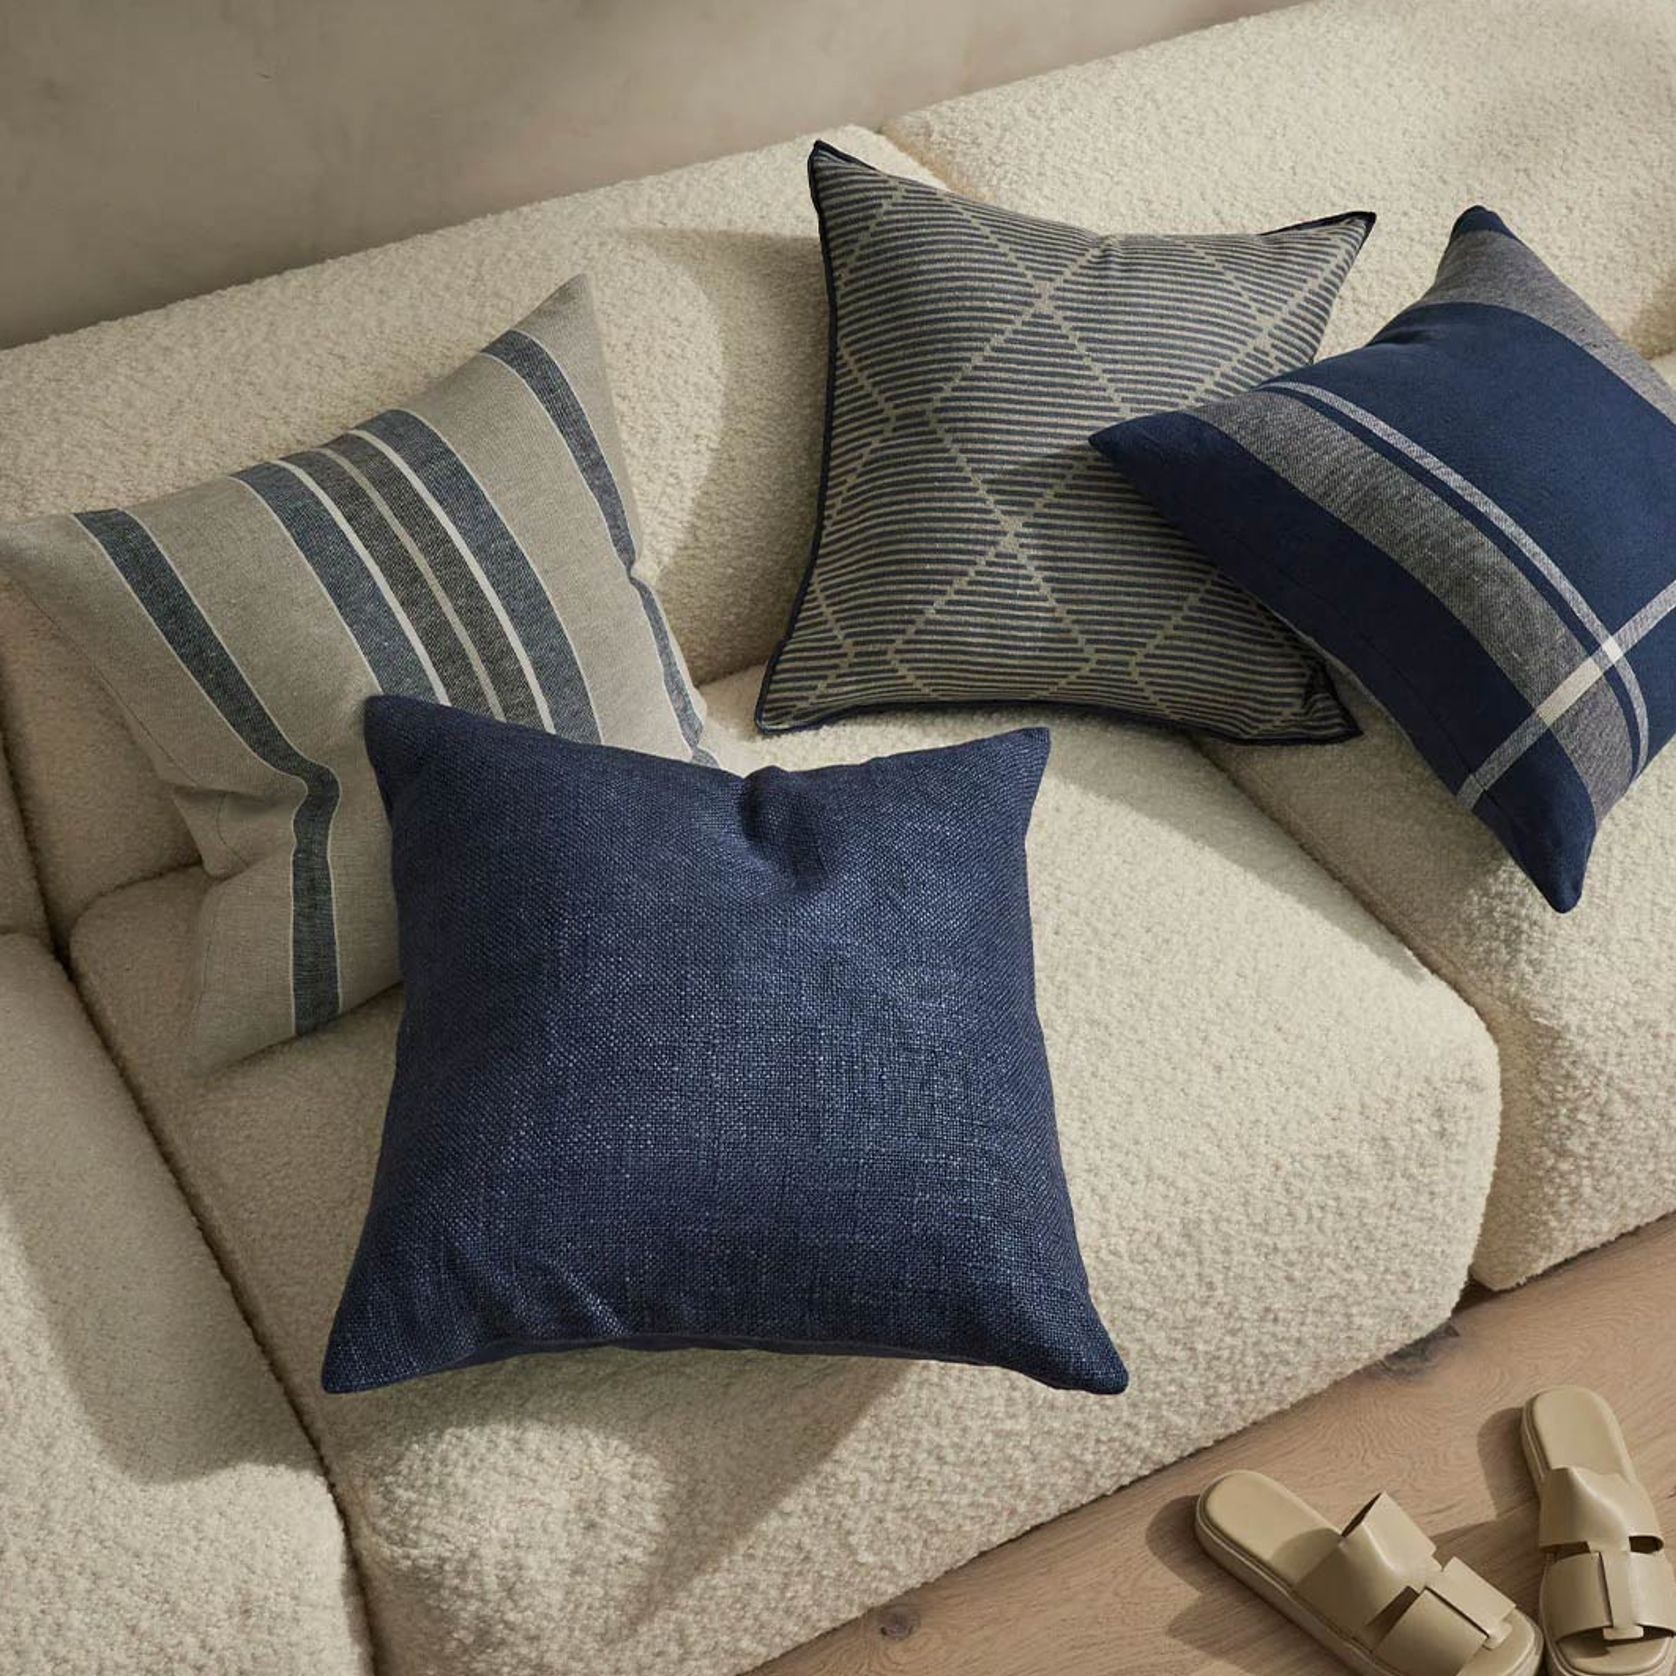 Weave Home Domenica Cushion - Denim | 50 x 50cm gallery detail image